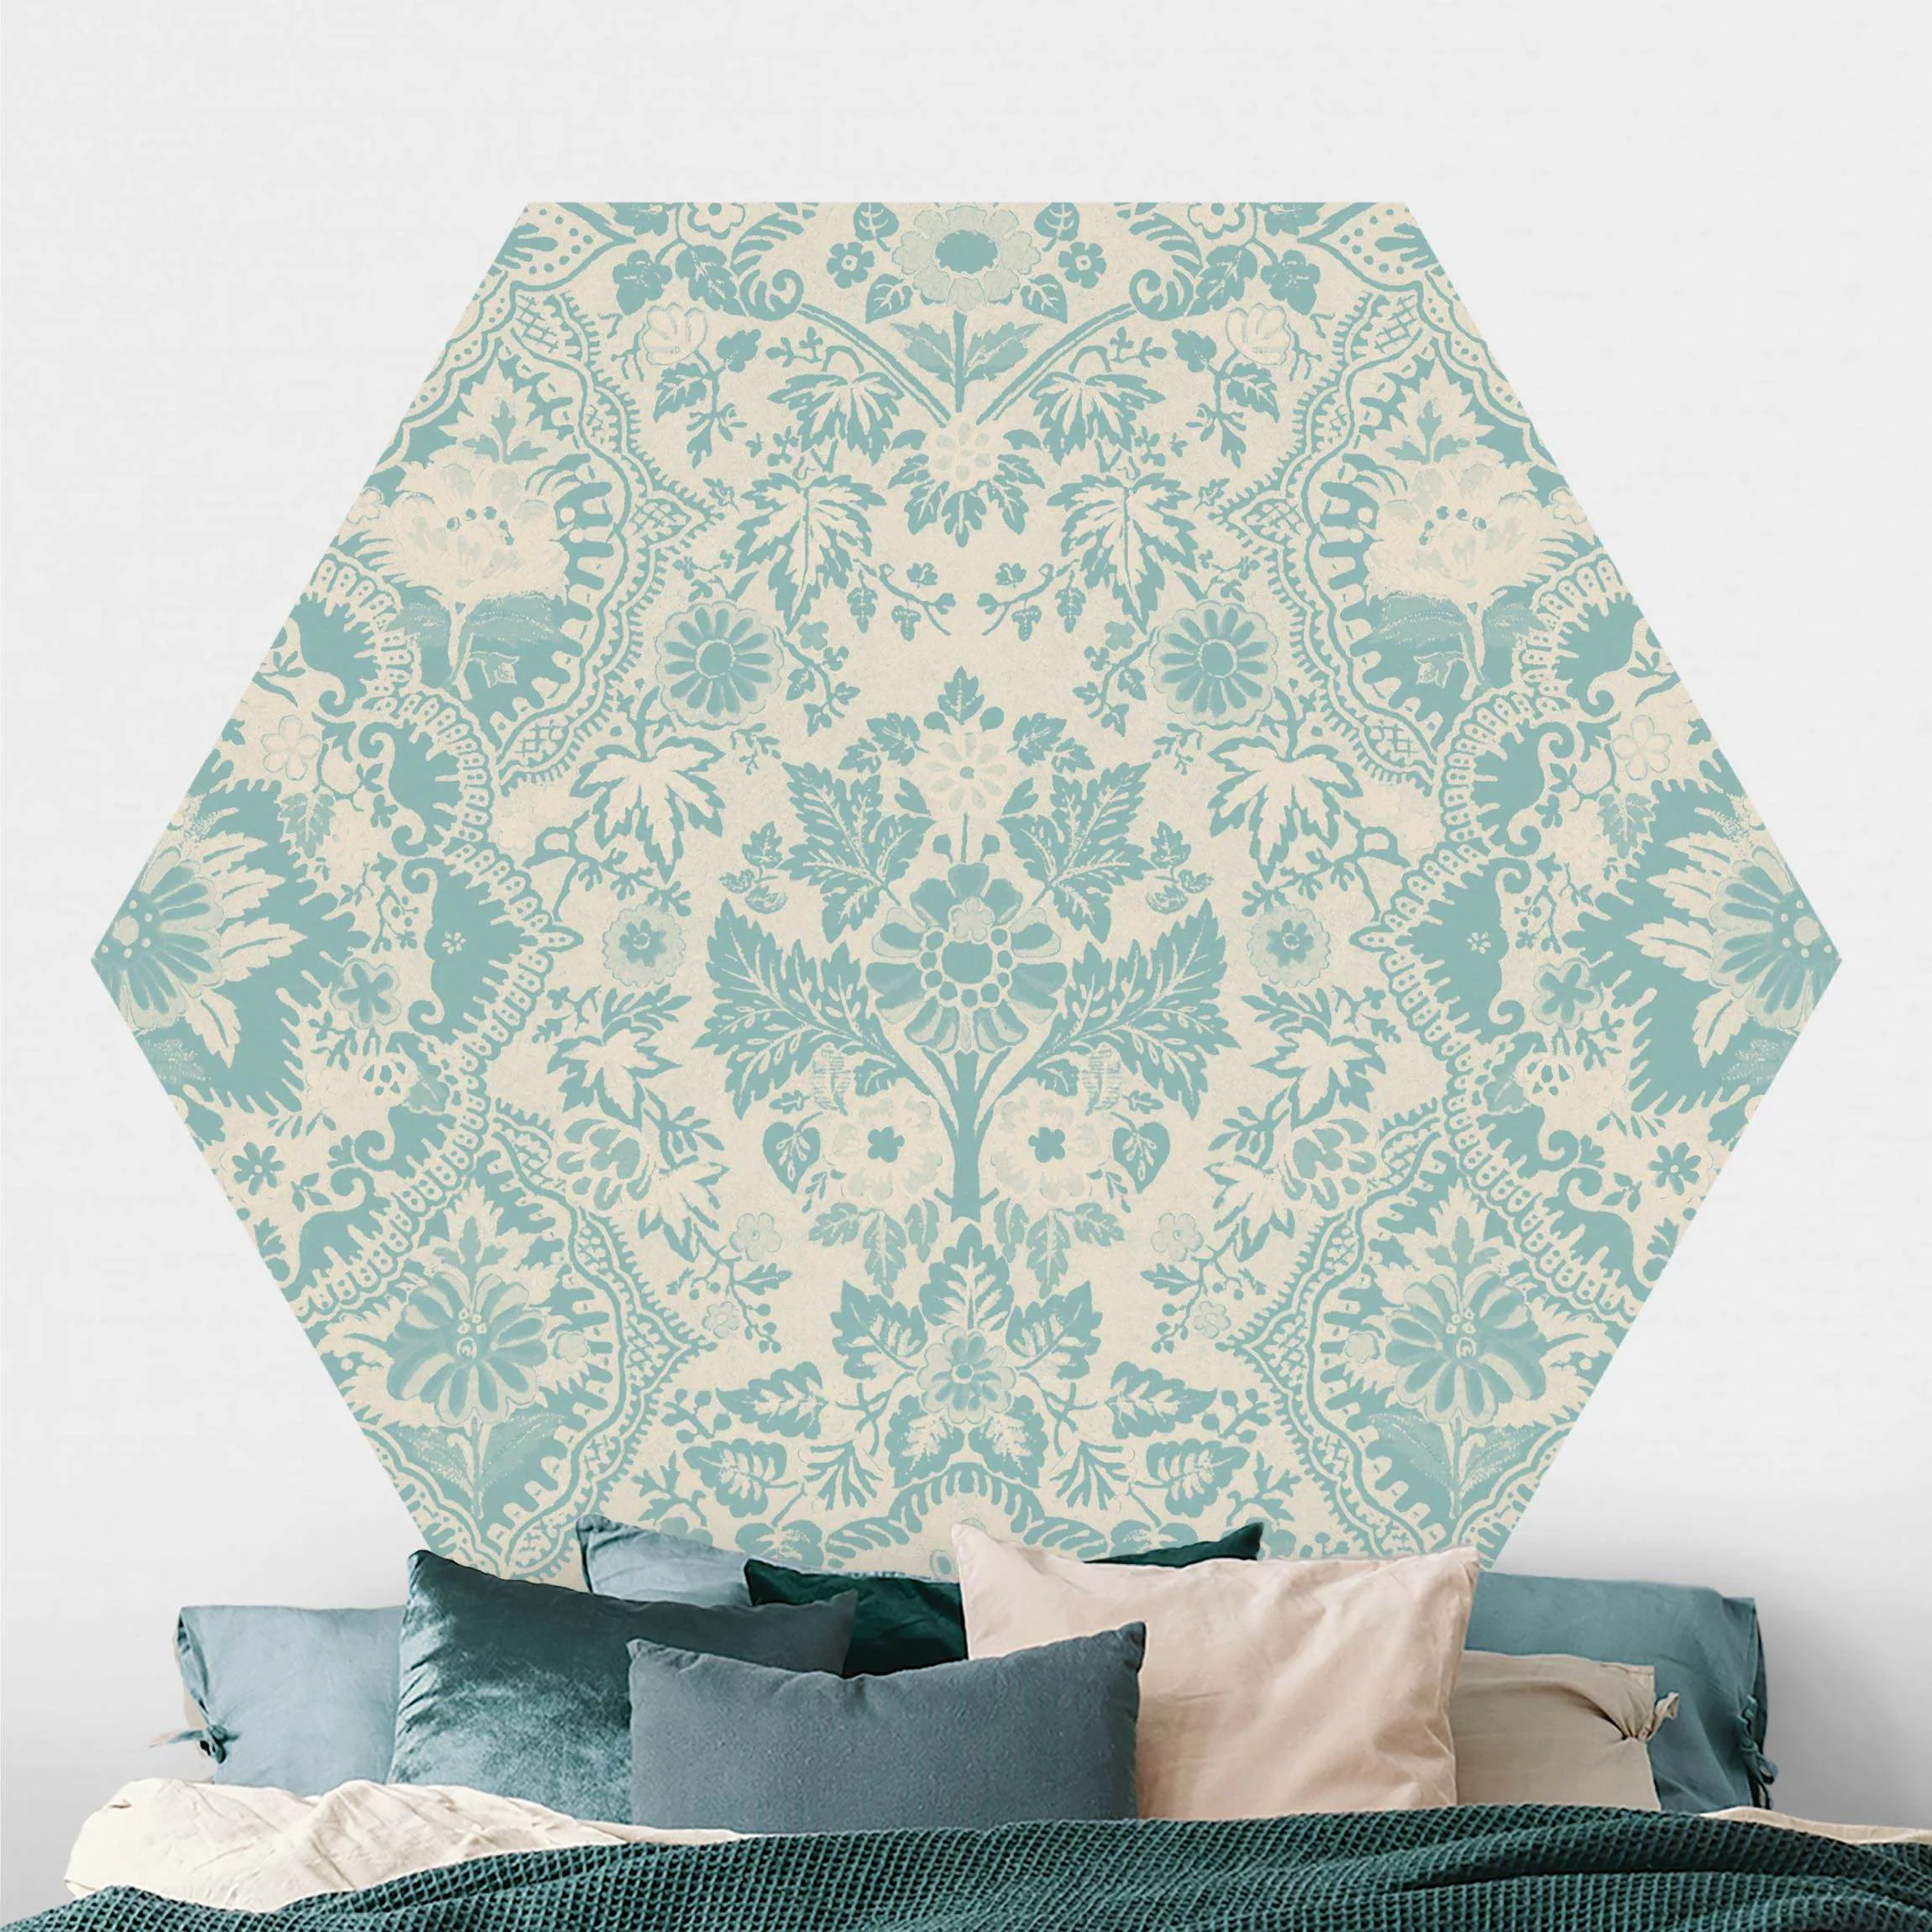 Hexagon Mustertapete selbstklebend Shabby Barocktapete in Azur günstig online kaufen